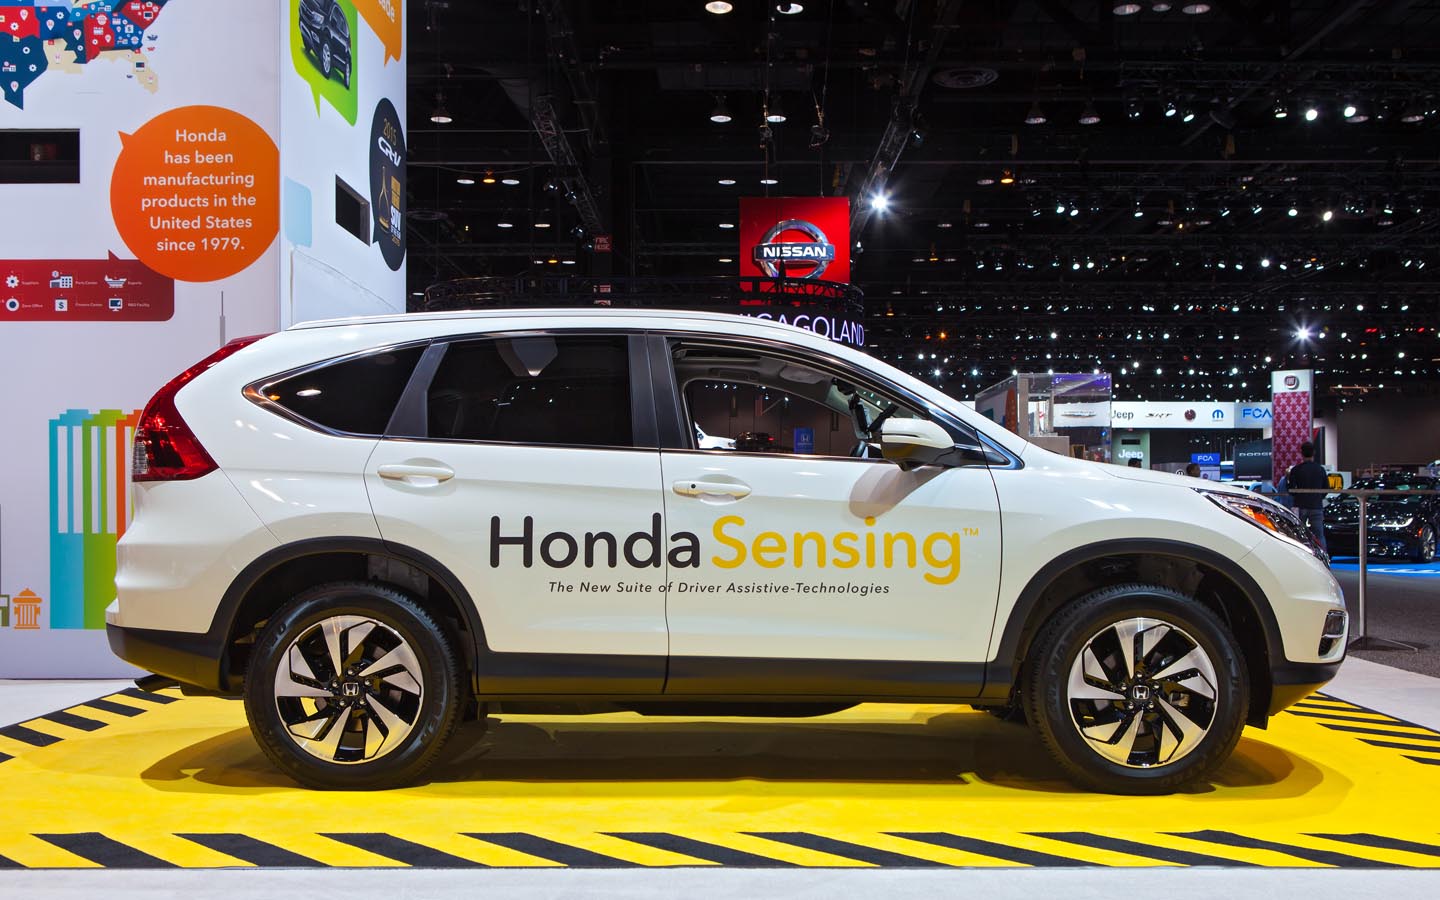 Honda Sensing Suite is Honda's exclusive advanced driver assistance system